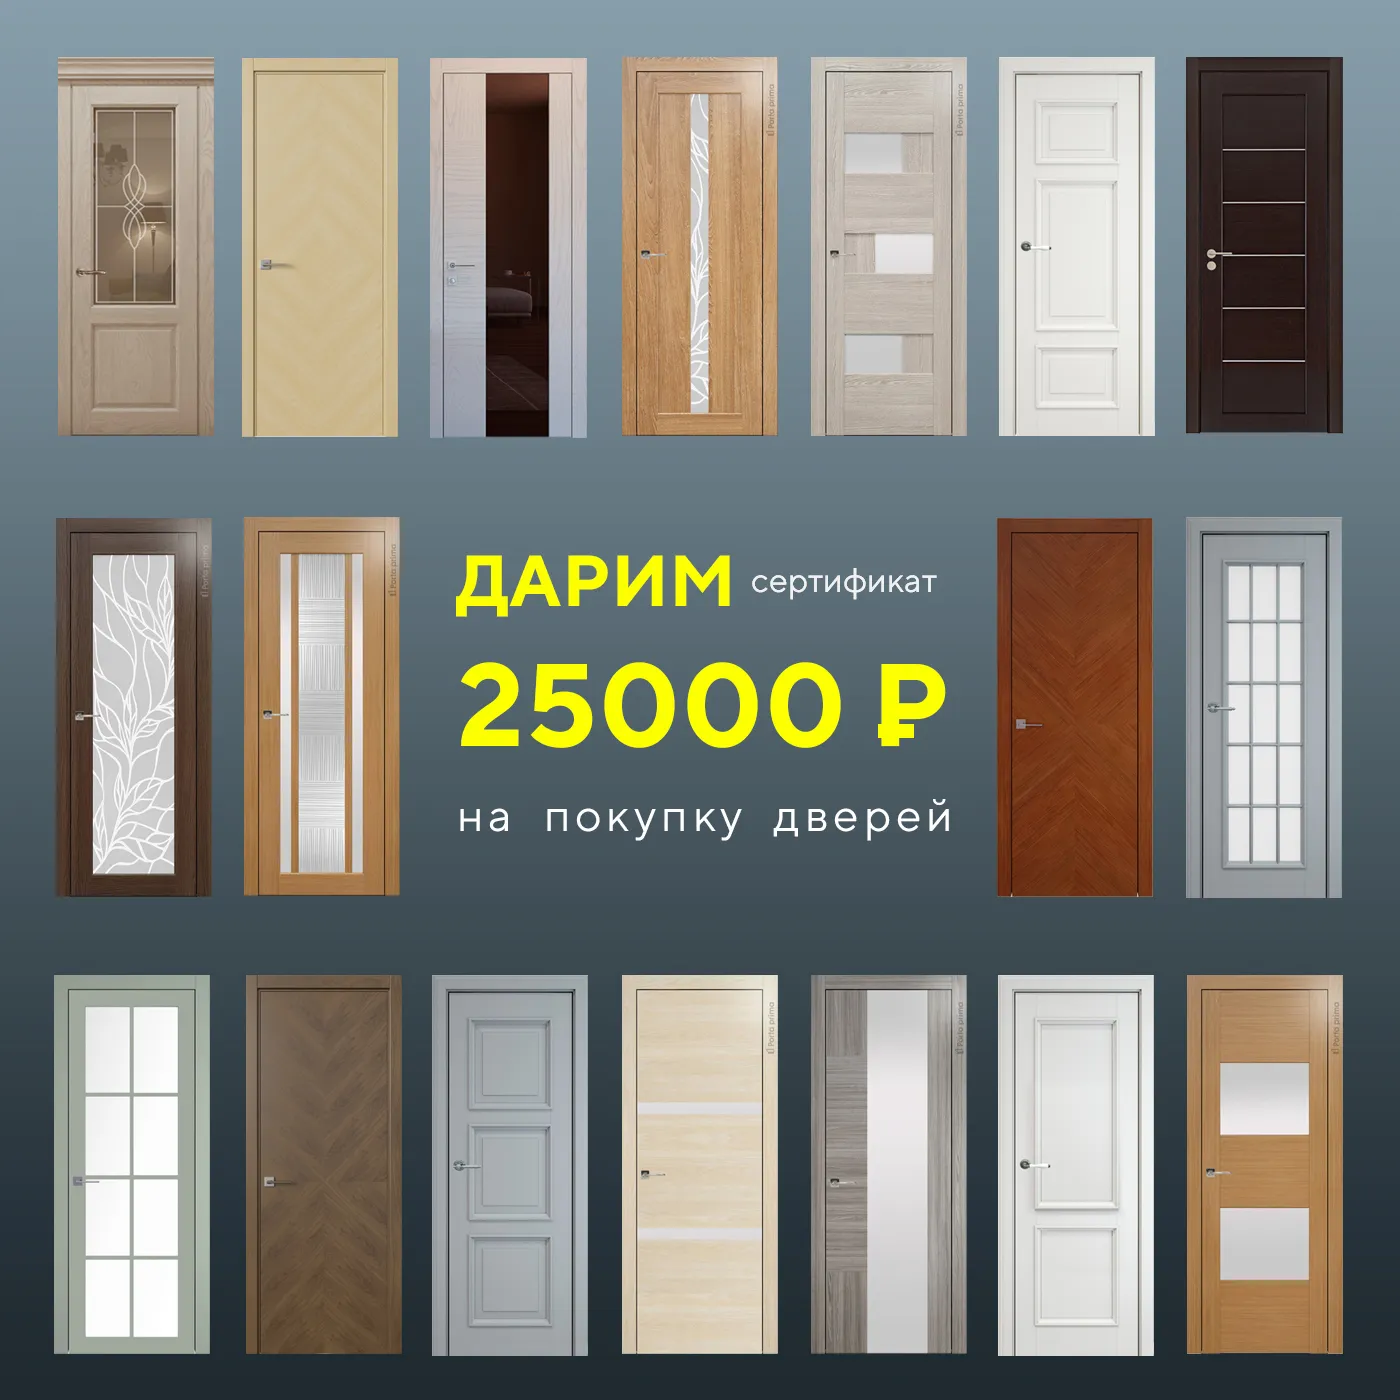 Новости: Дарим 25000 рублей на покупку дверей!